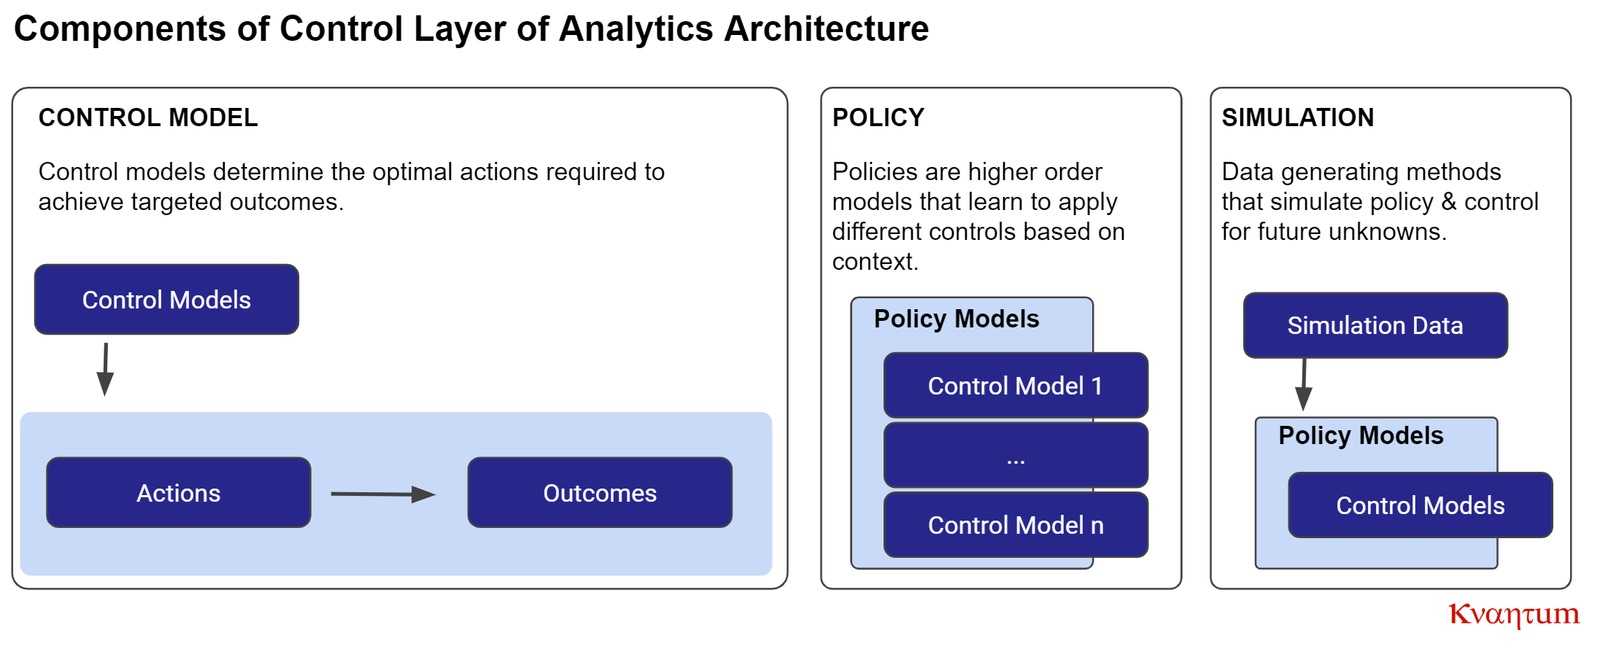 kvantum analytics architecture control layer components